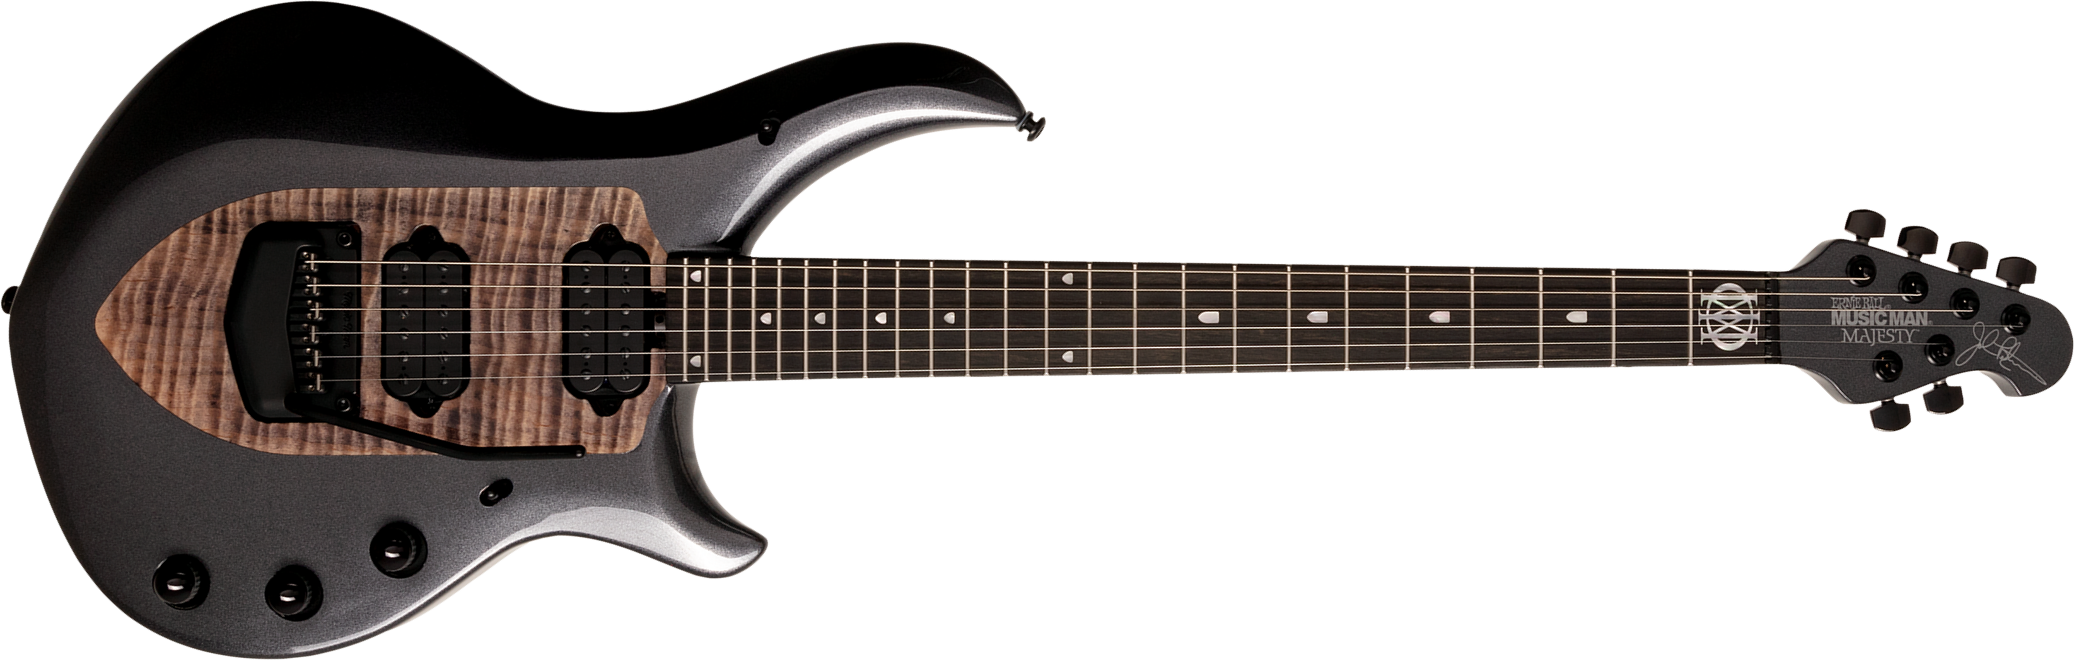 Music Man John Petrucci Majesty 6 Signature 2h Dimarzio Piezo Trem - Smoked Pearl - E-Gitarre aus Metall - Main picture